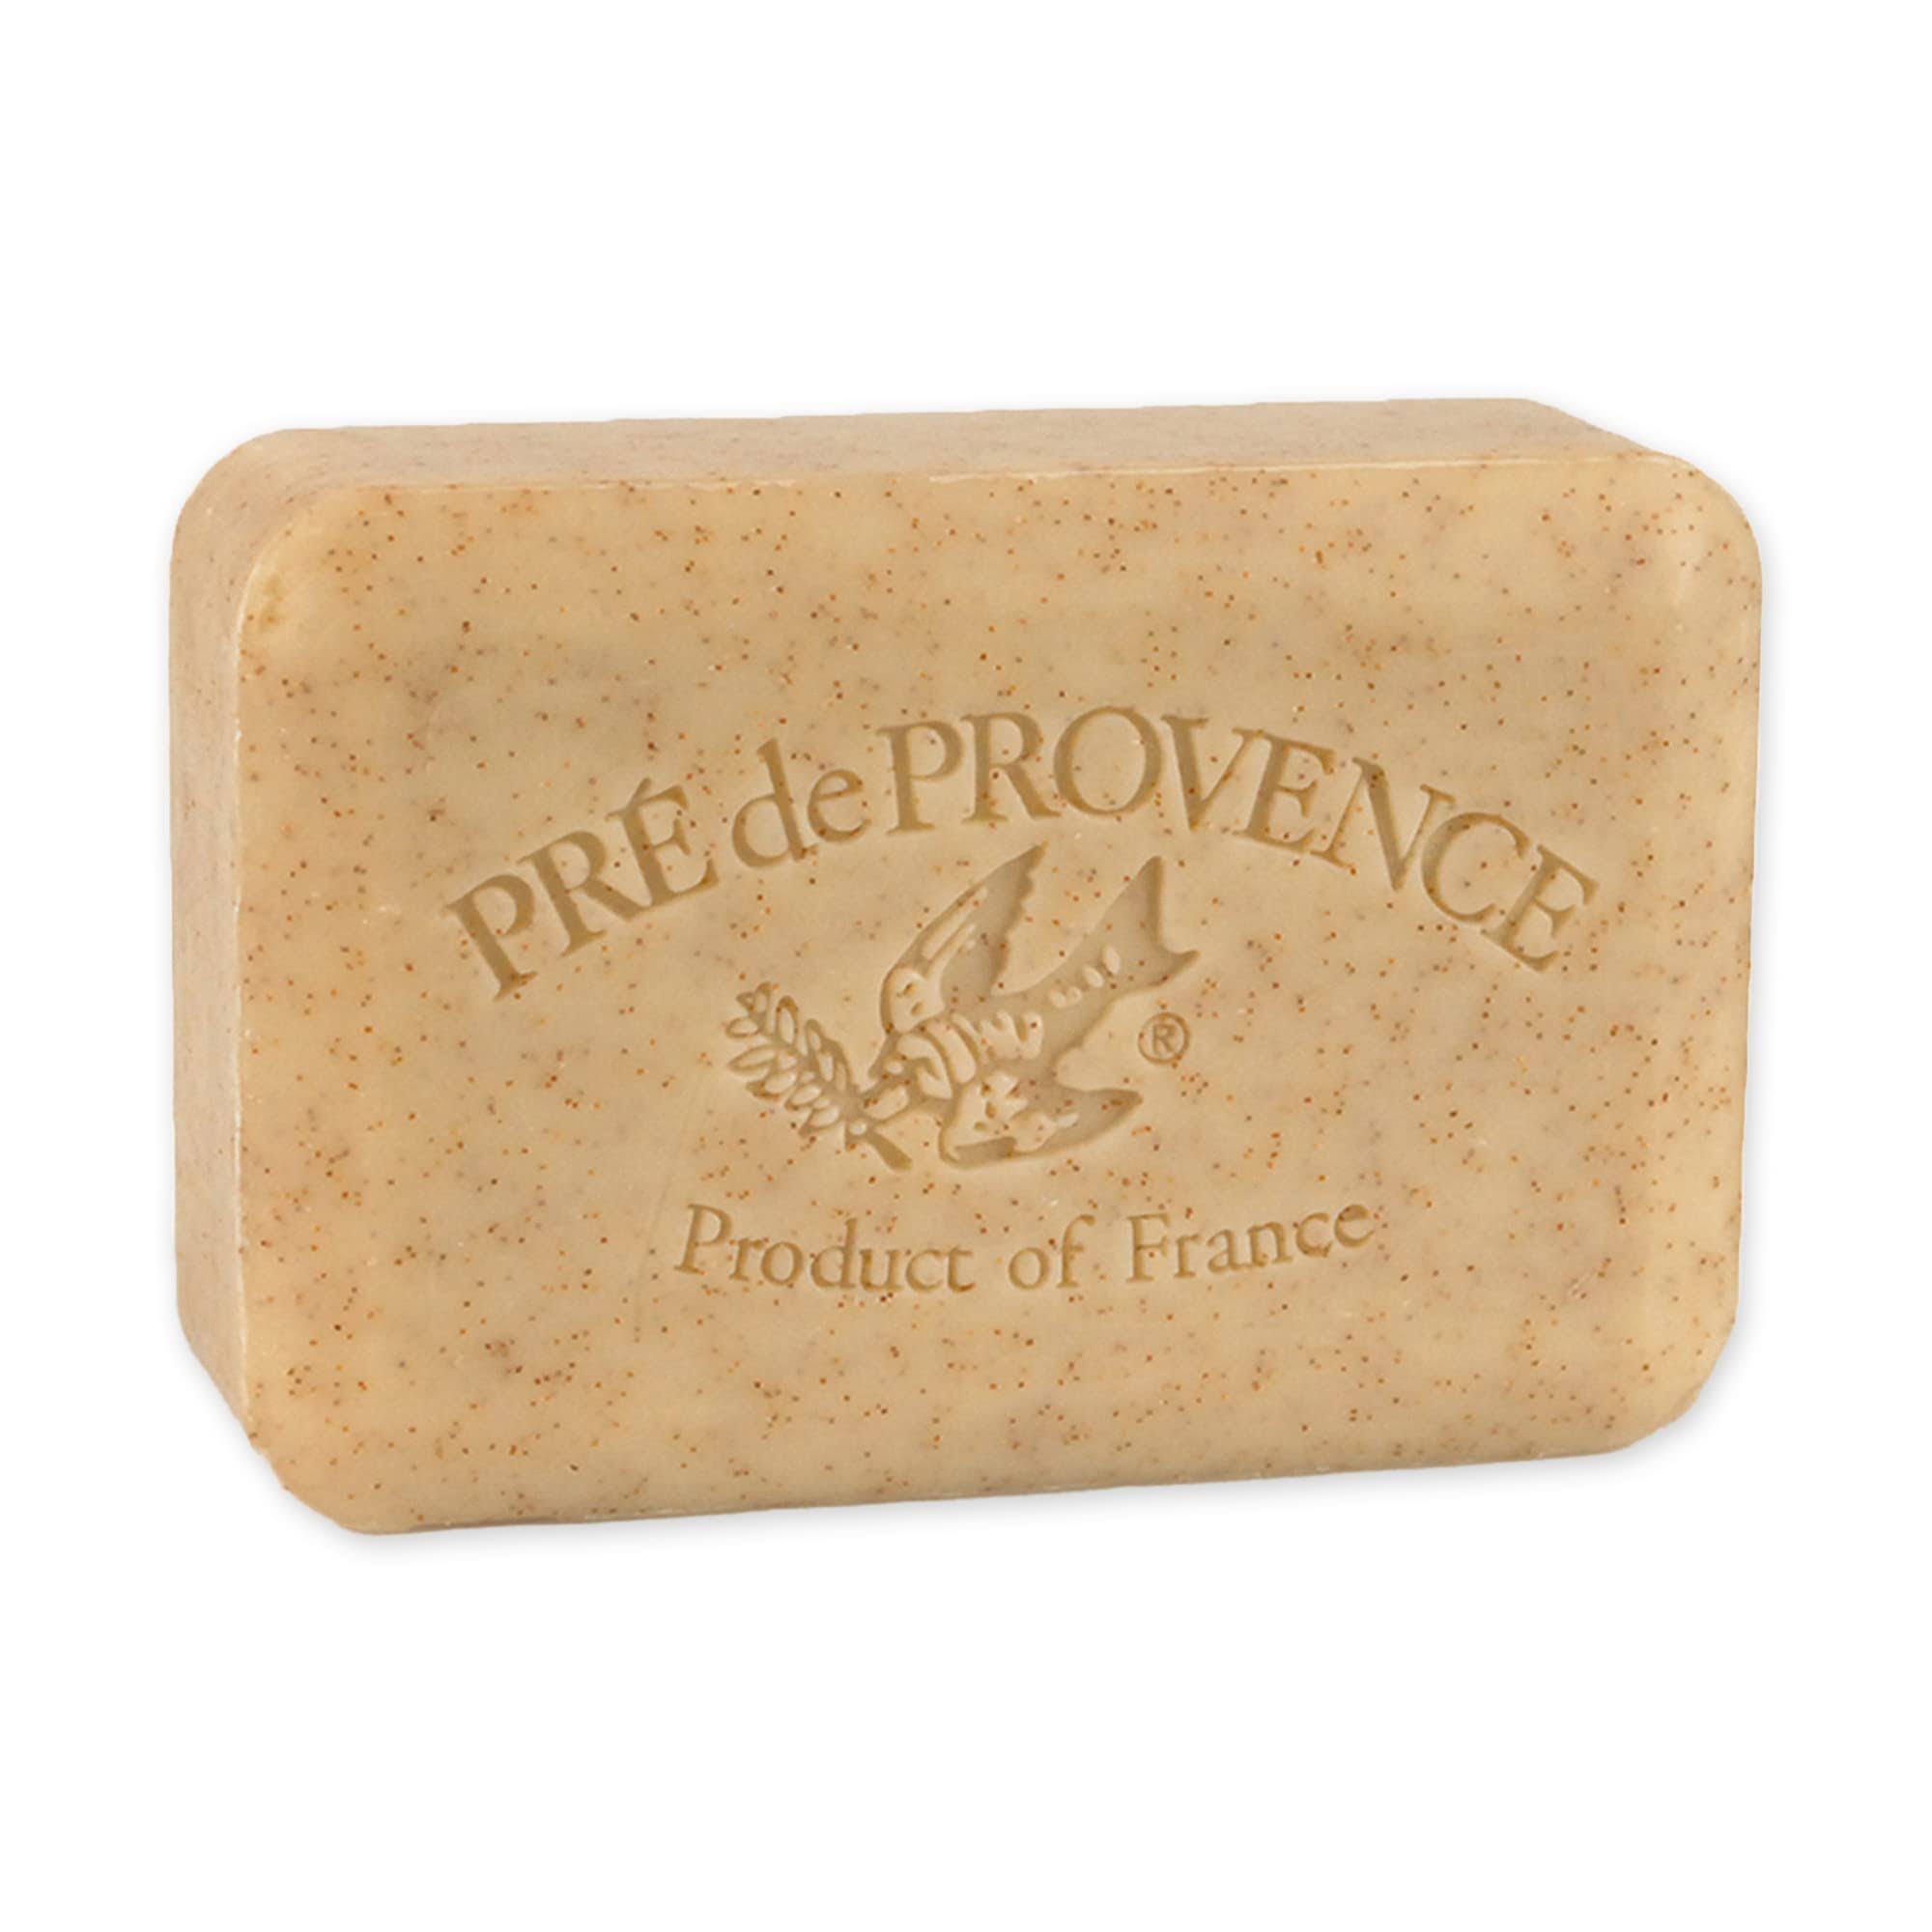 Pre De Provence Soap Bar - Honey Almond, 250g